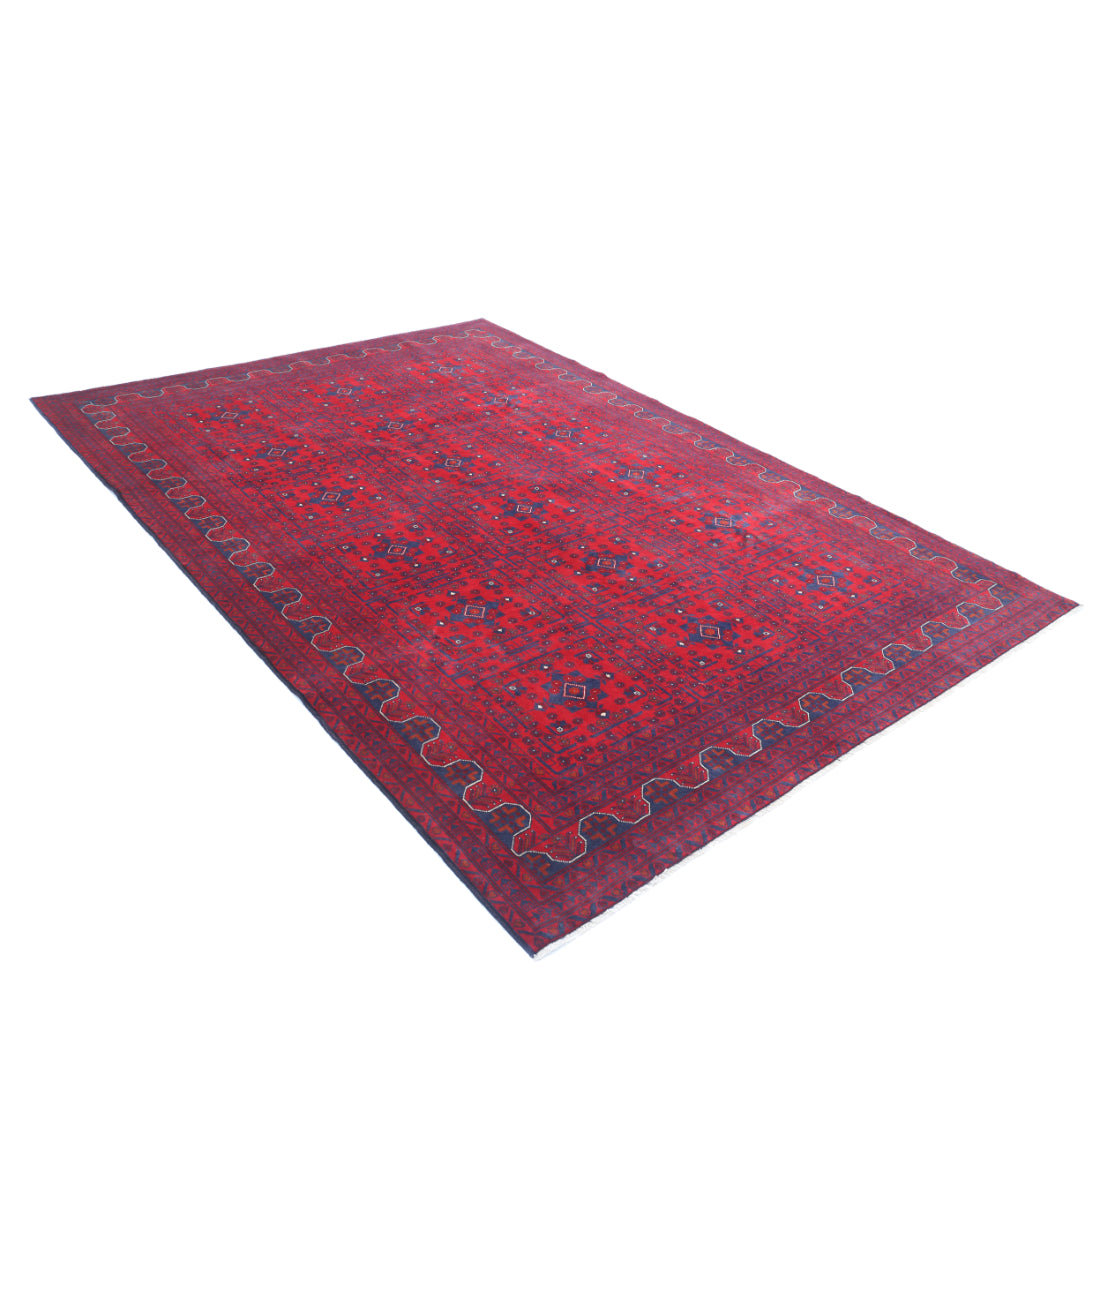 Hand Knotted Afghan Khamyab Wool Rug - 6'7'' x 9'8'' 6'7'' x 9'8'' (198 X 290) / Red / Blue